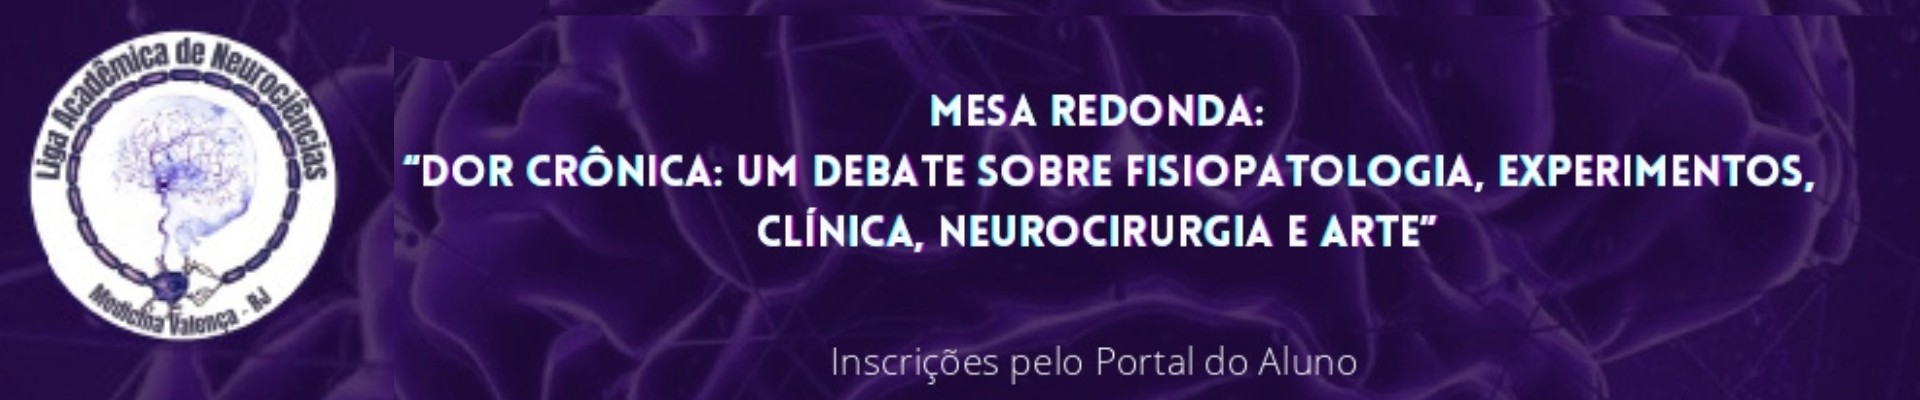 Mesa Redonda - Dor Crônica: Um debate sobre fisiopatologia, experimentos, clínica, neurocirurgia e arte.